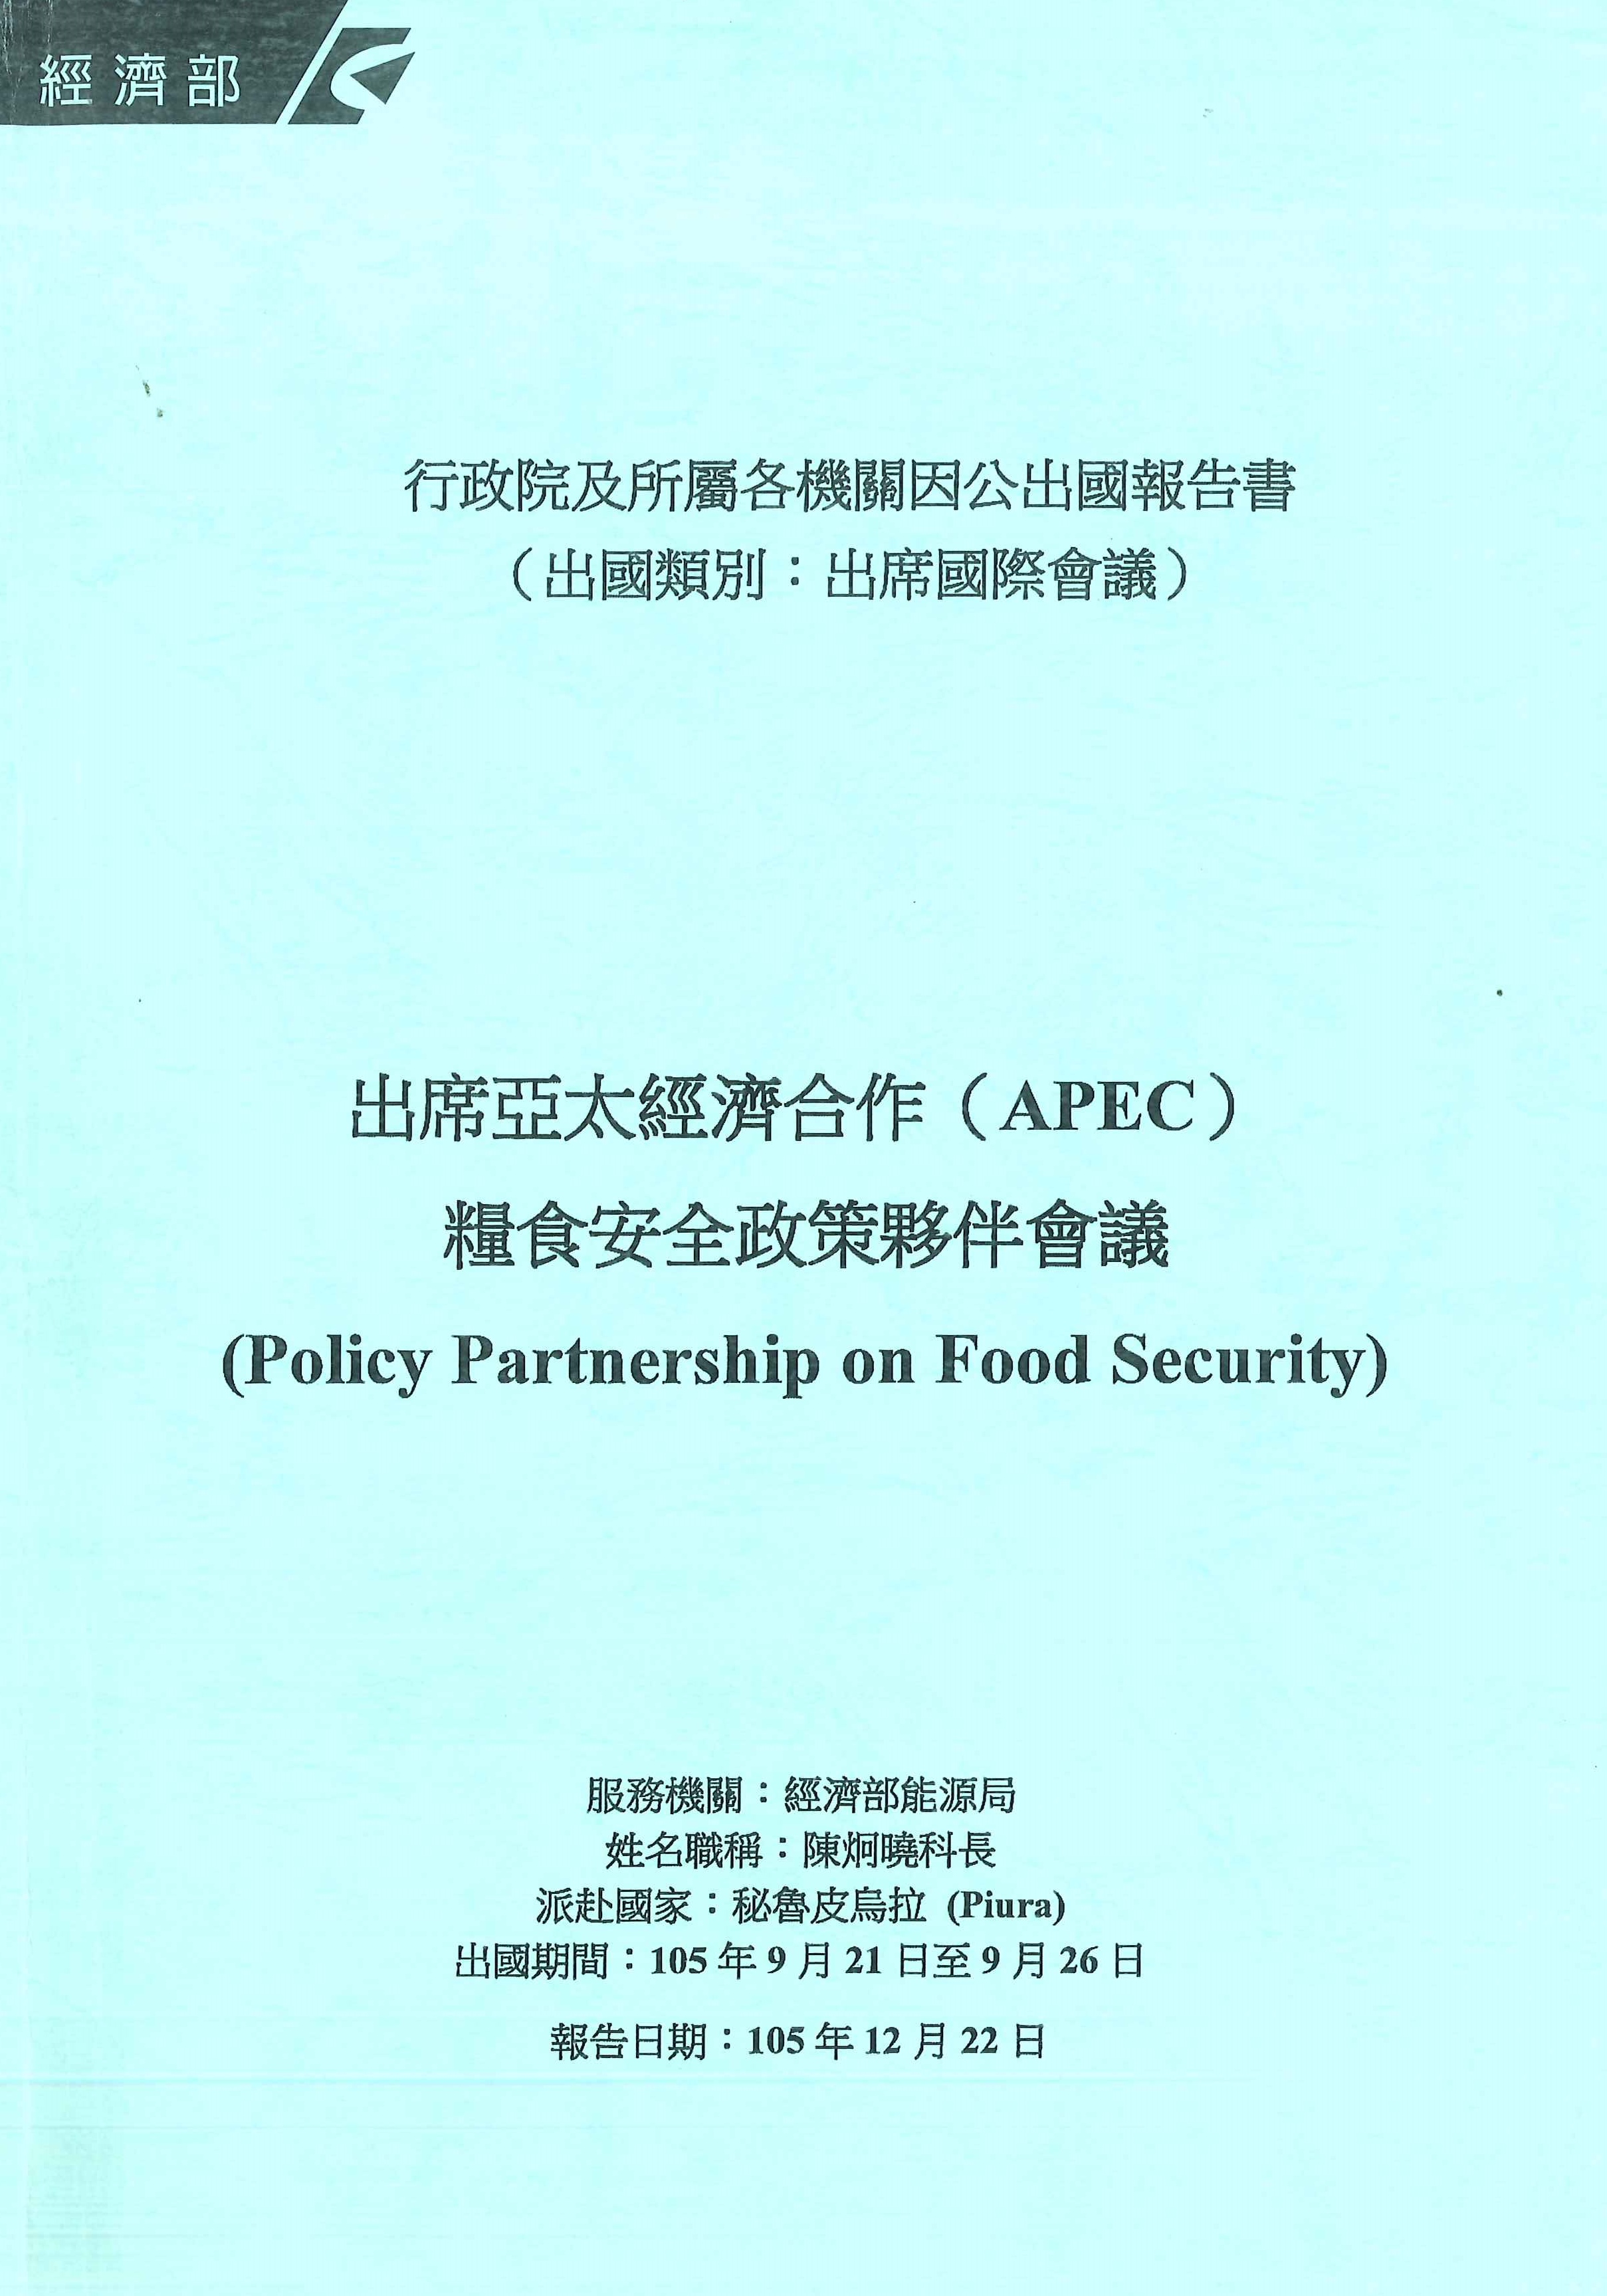 出席亞太經濟合作(APEC)糧食安全政策夥伴會議=Policy partnership on food security